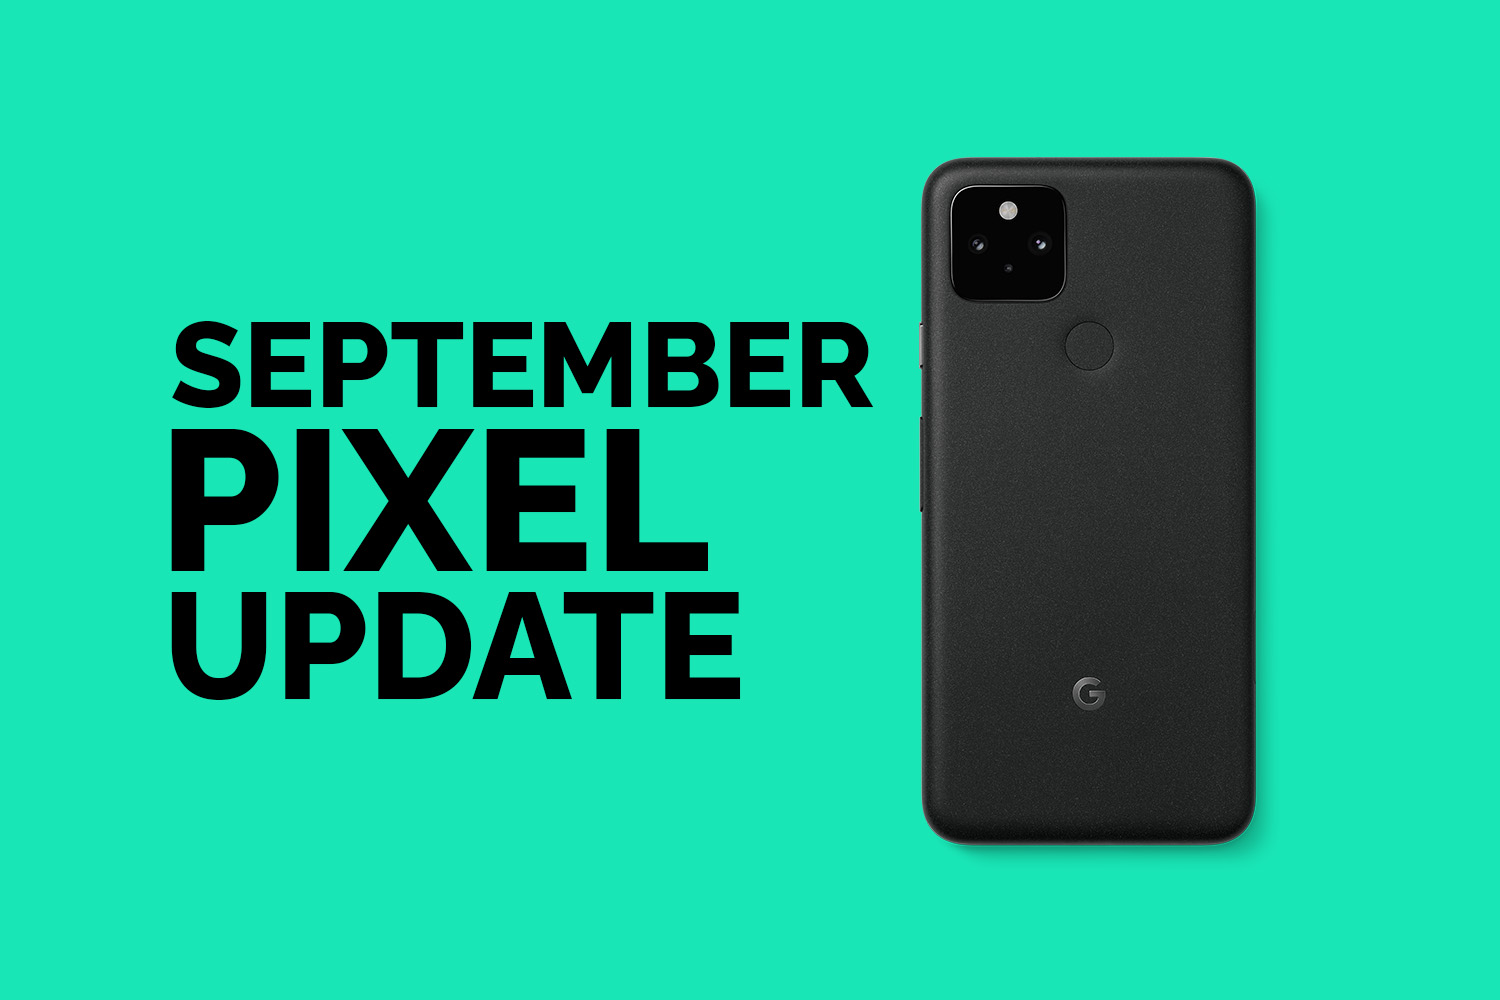 The September Google Pixel Update is Here